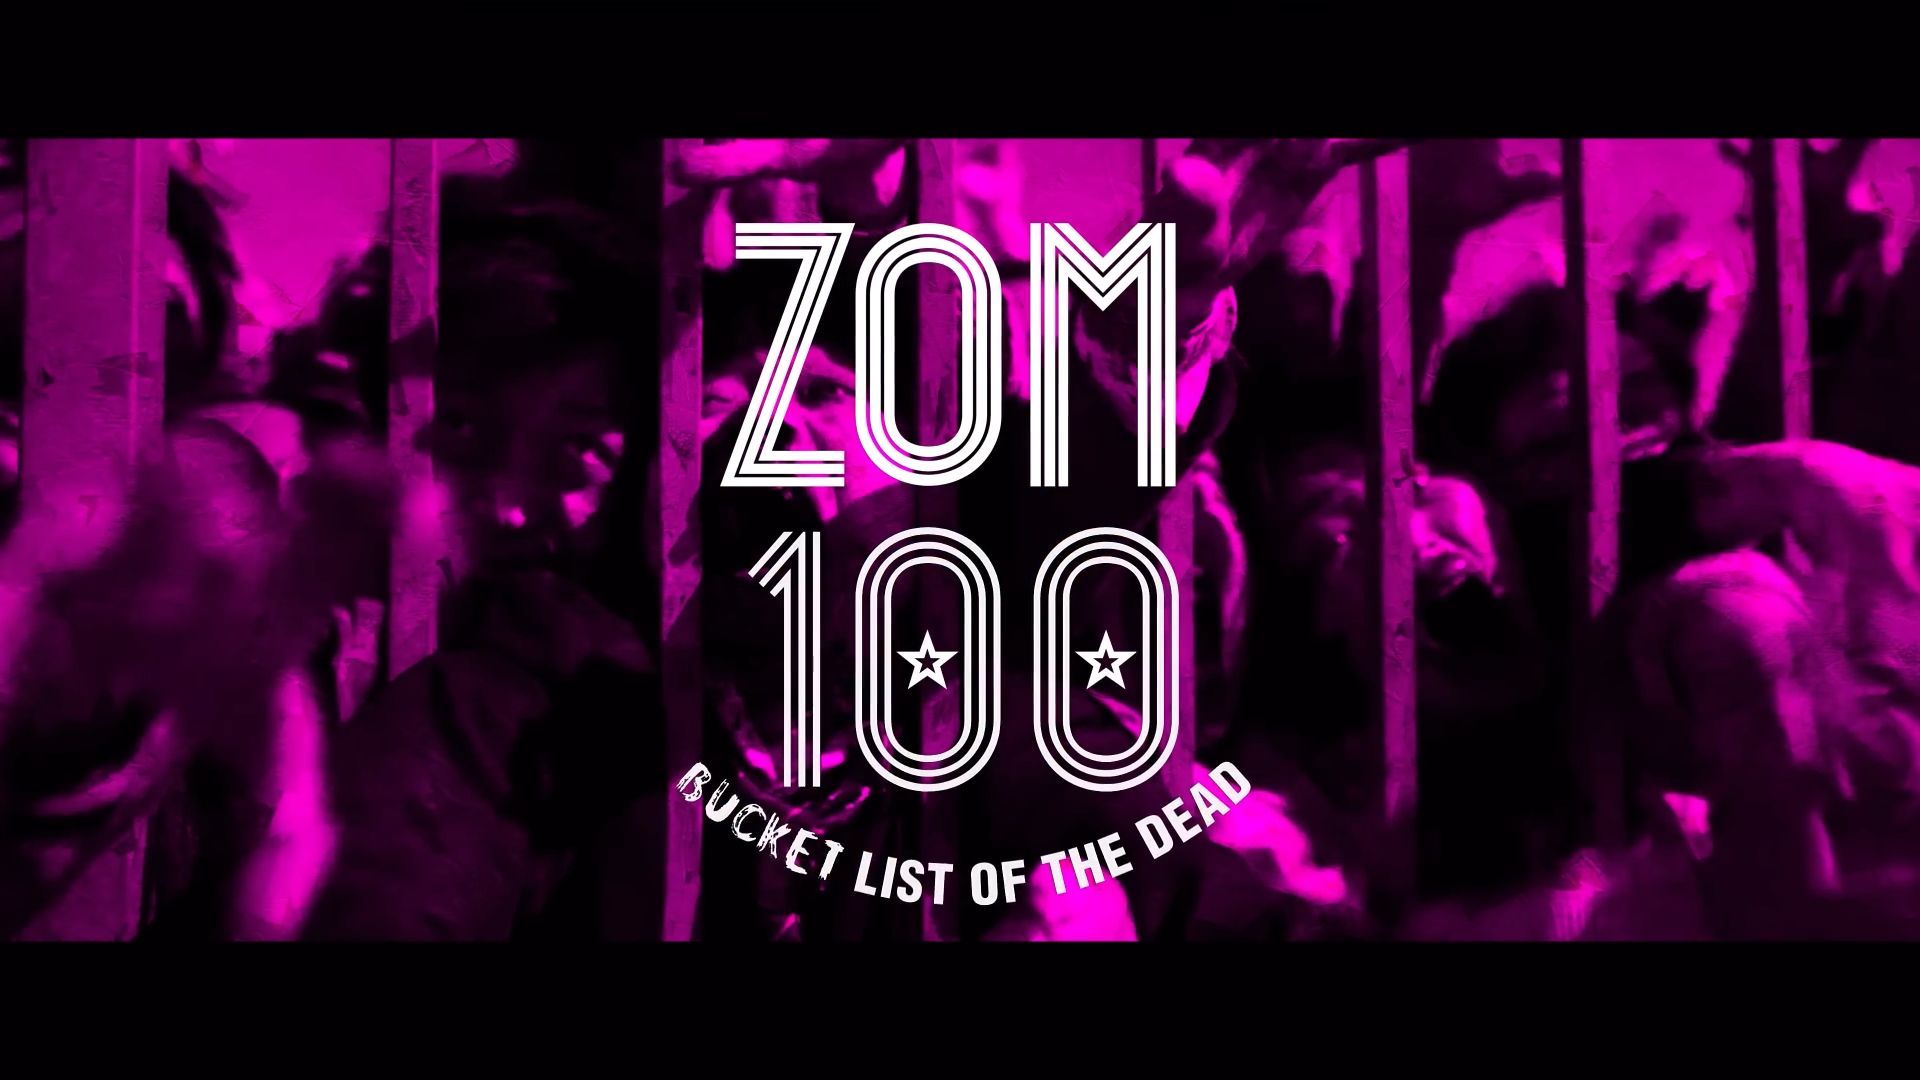 Zom 100: Bucket List of the Dead Wallpaper